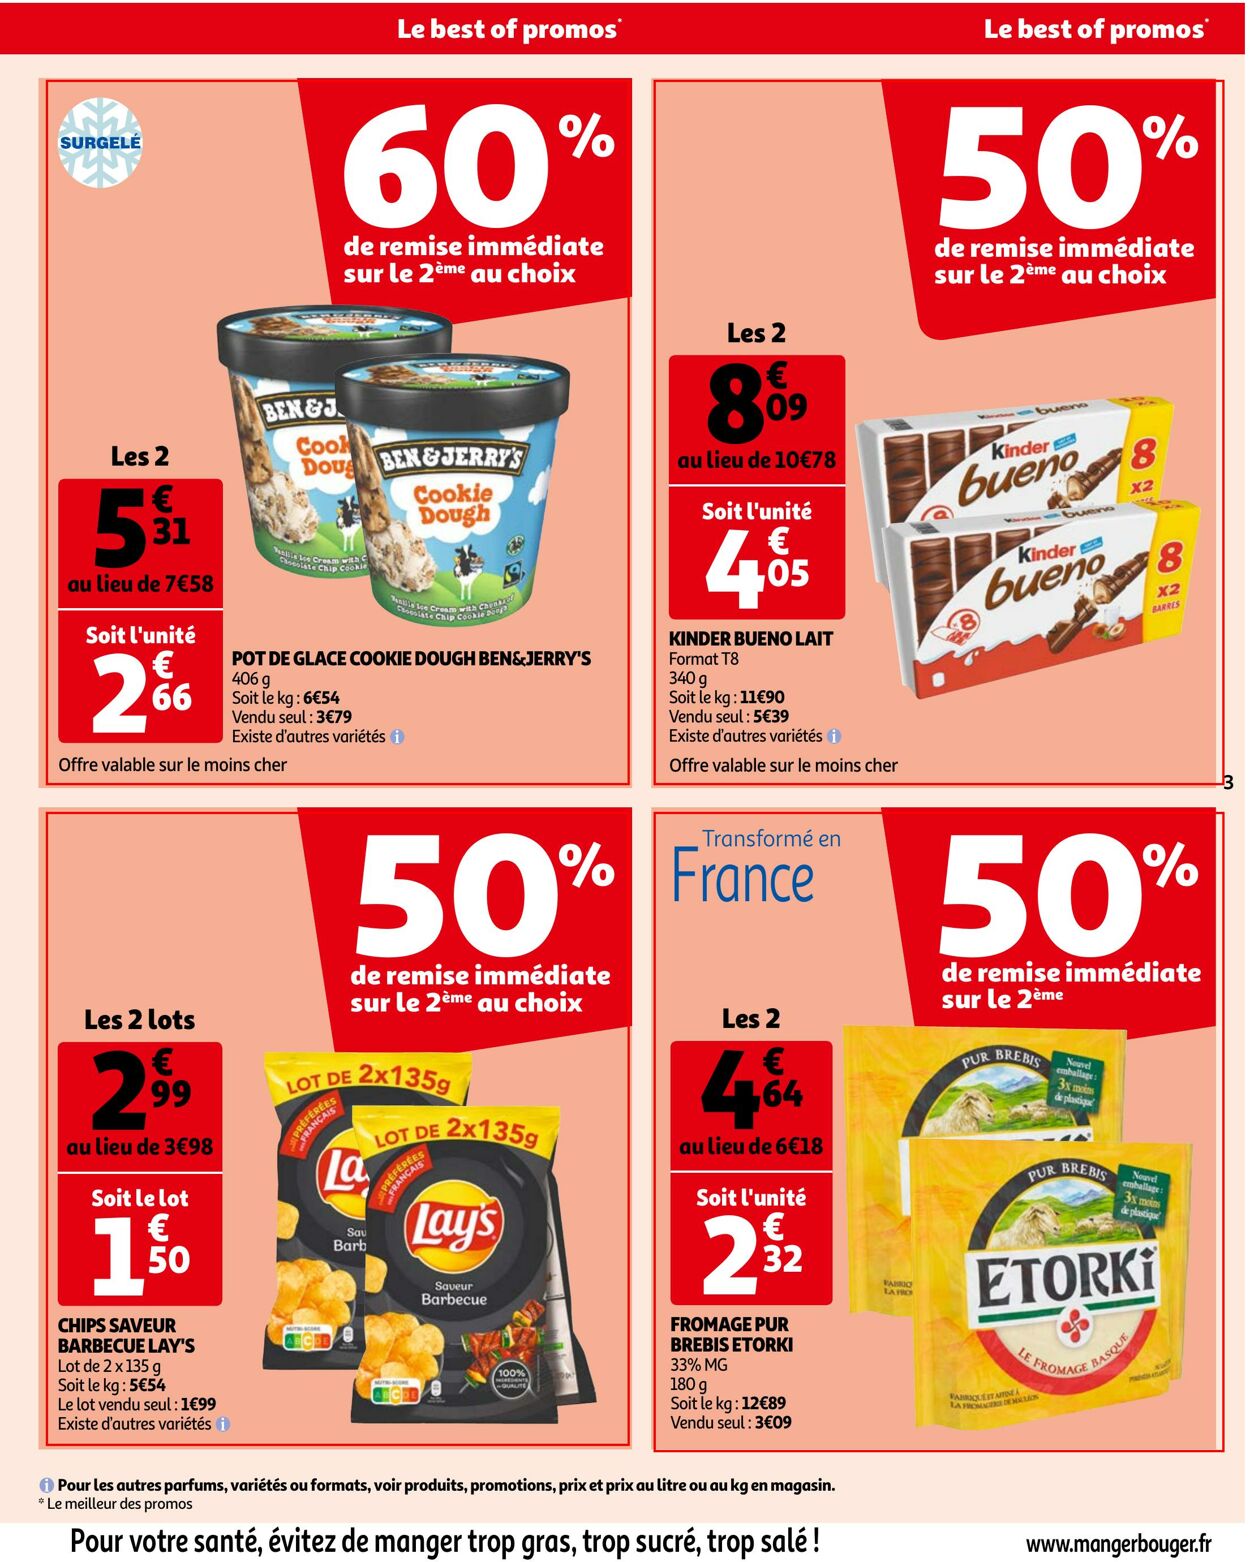 Catalogue Auchan 24.01.2023 - 30.01.2023